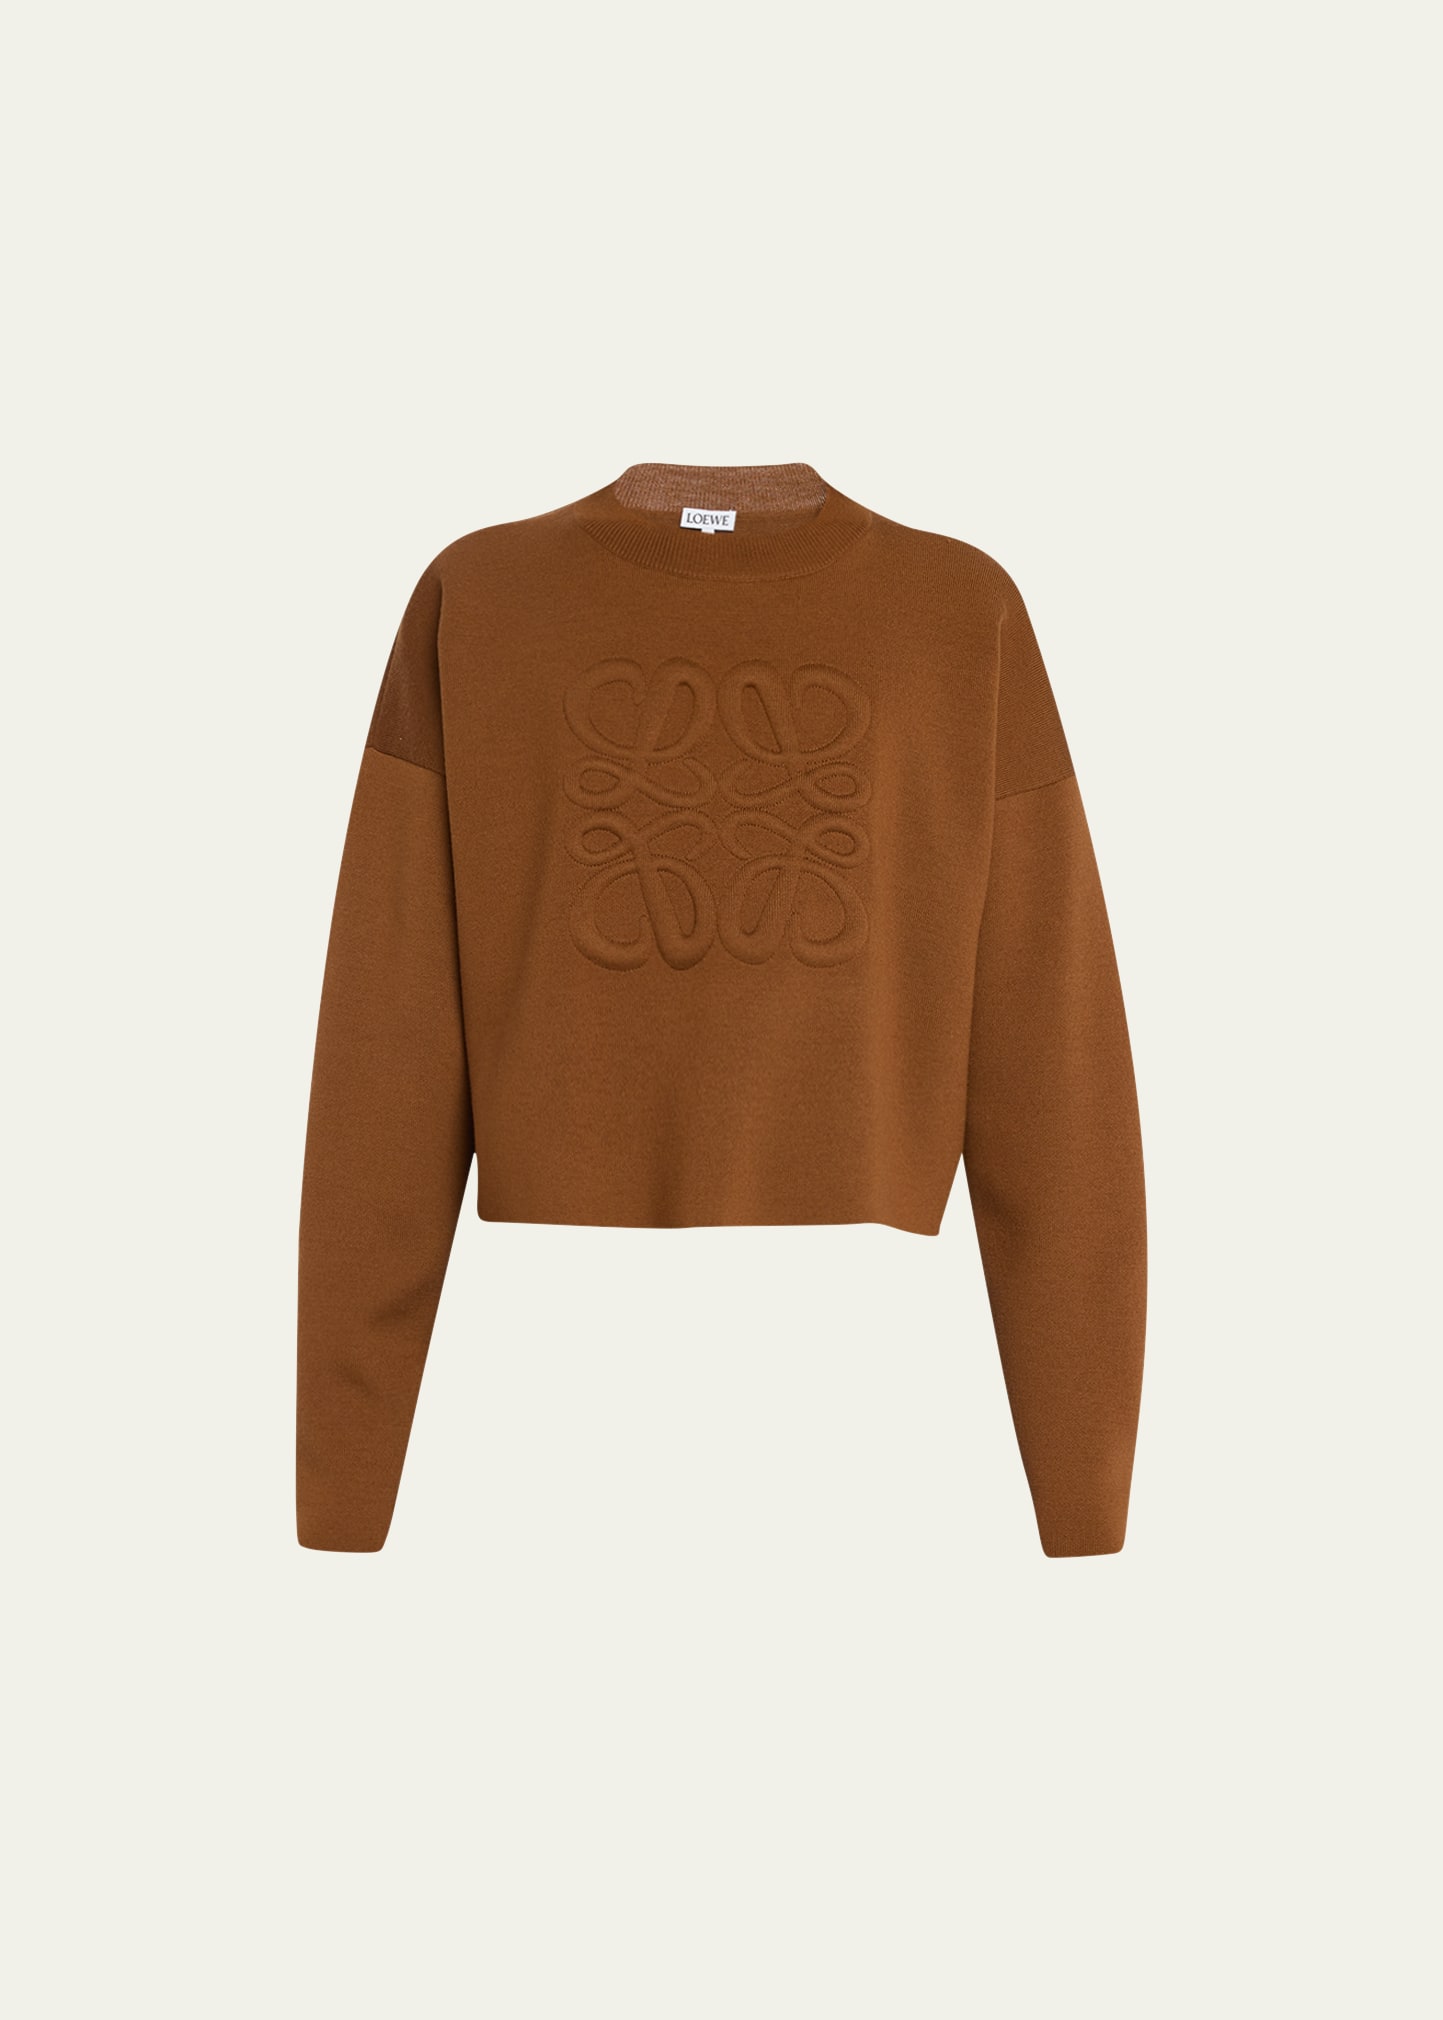 Loewe Short Wool Sweater With Anagram Detail In Khaki Gree